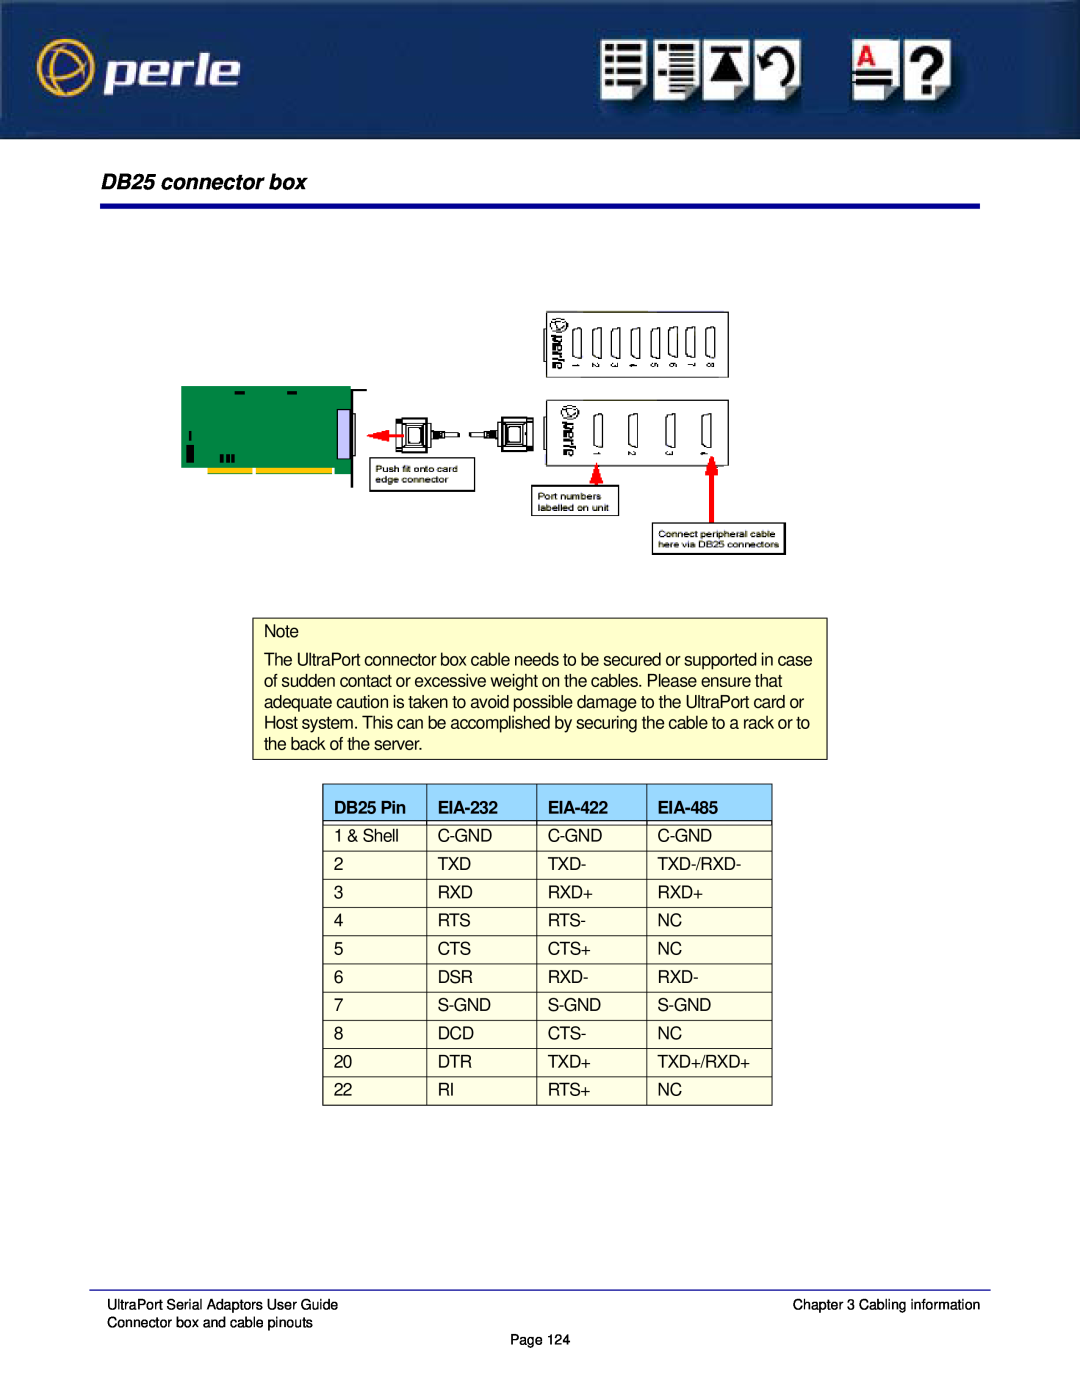 Perle Systems 5500152-23 manual DB25 connector box, DB25 Pin, EIA-232, EIA-422, EIA-485 